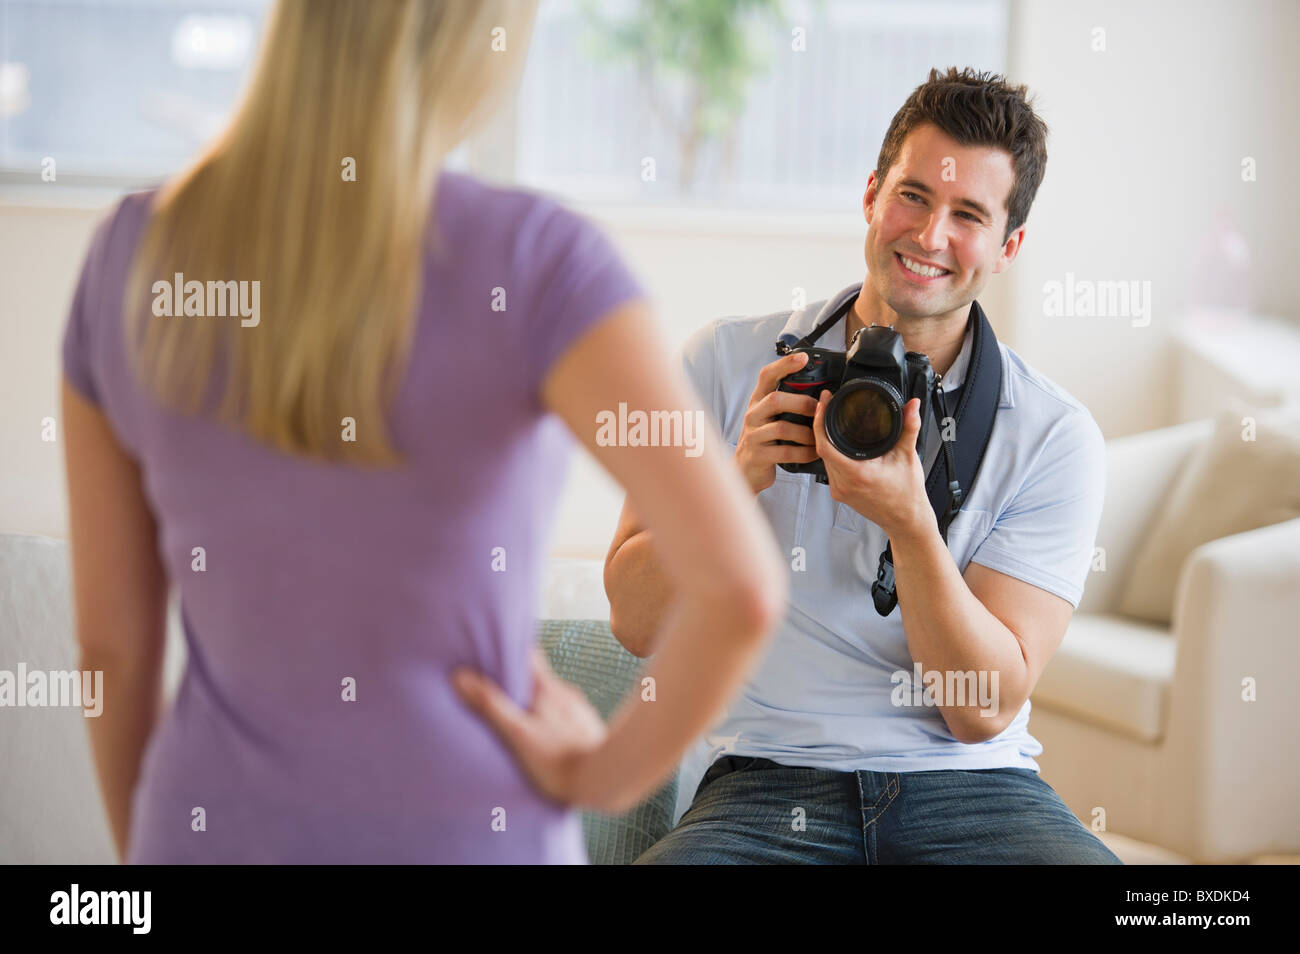 Man taking photograph of woman Stock Photo